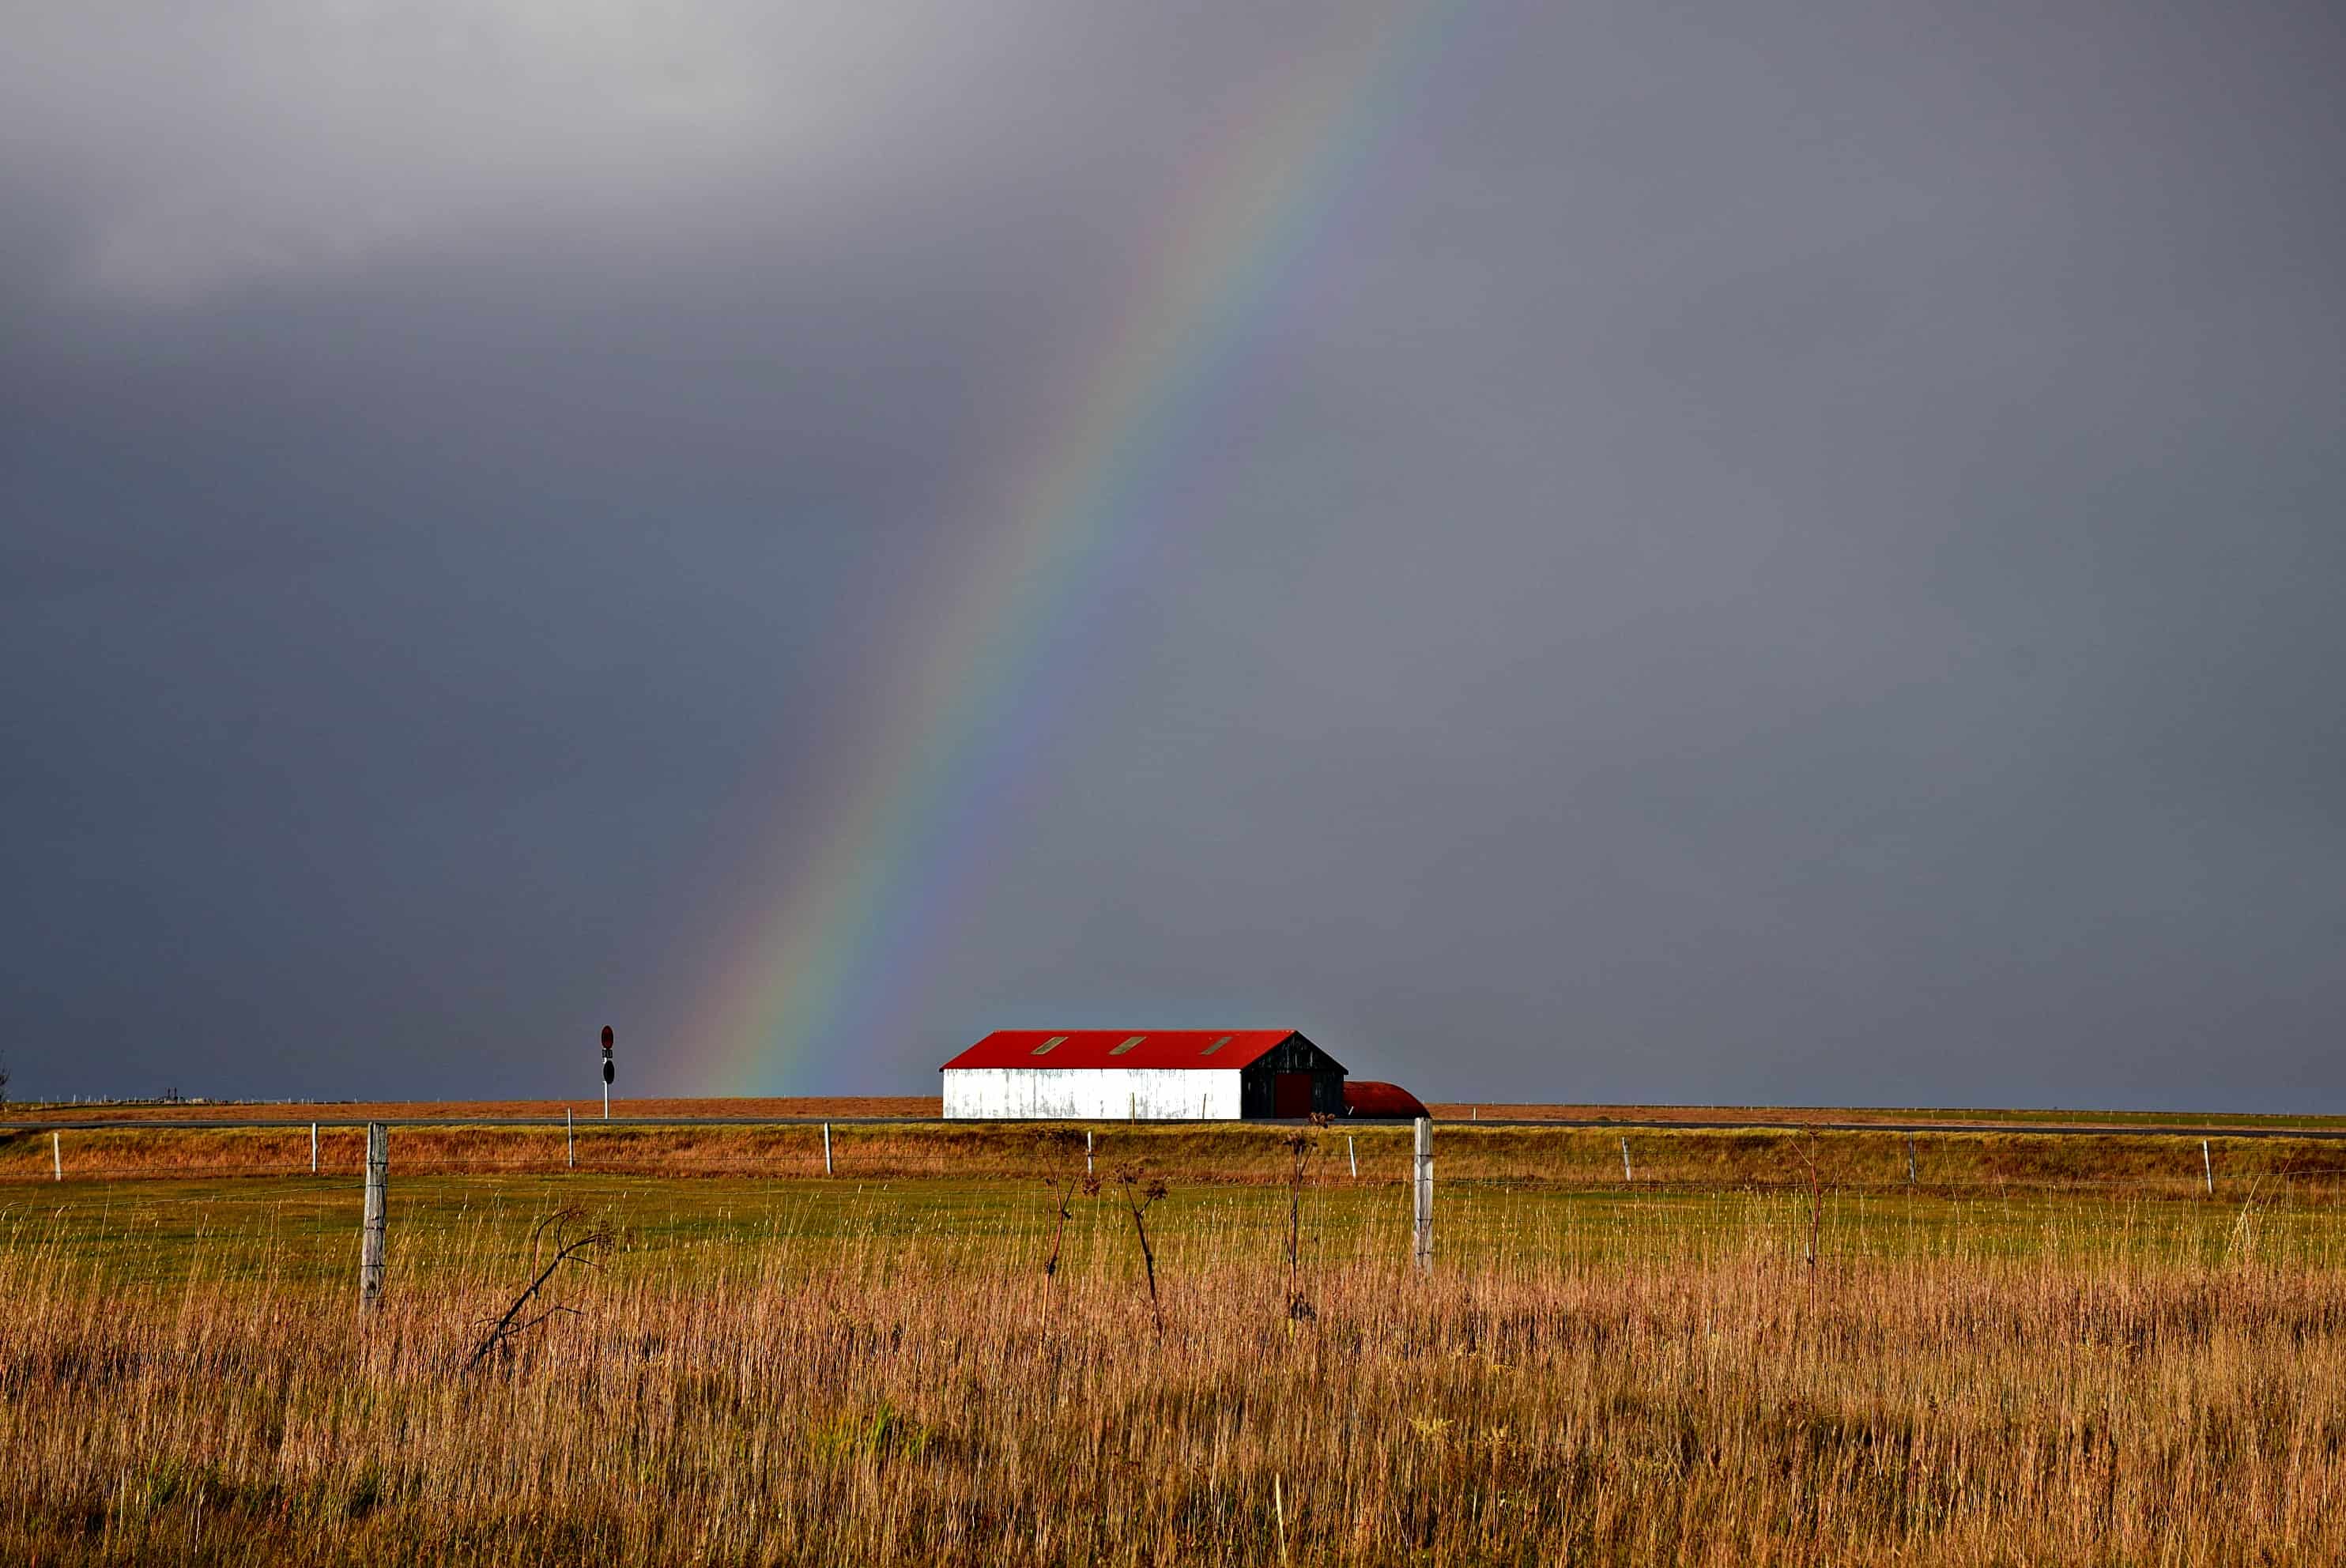 Iceland rainbow